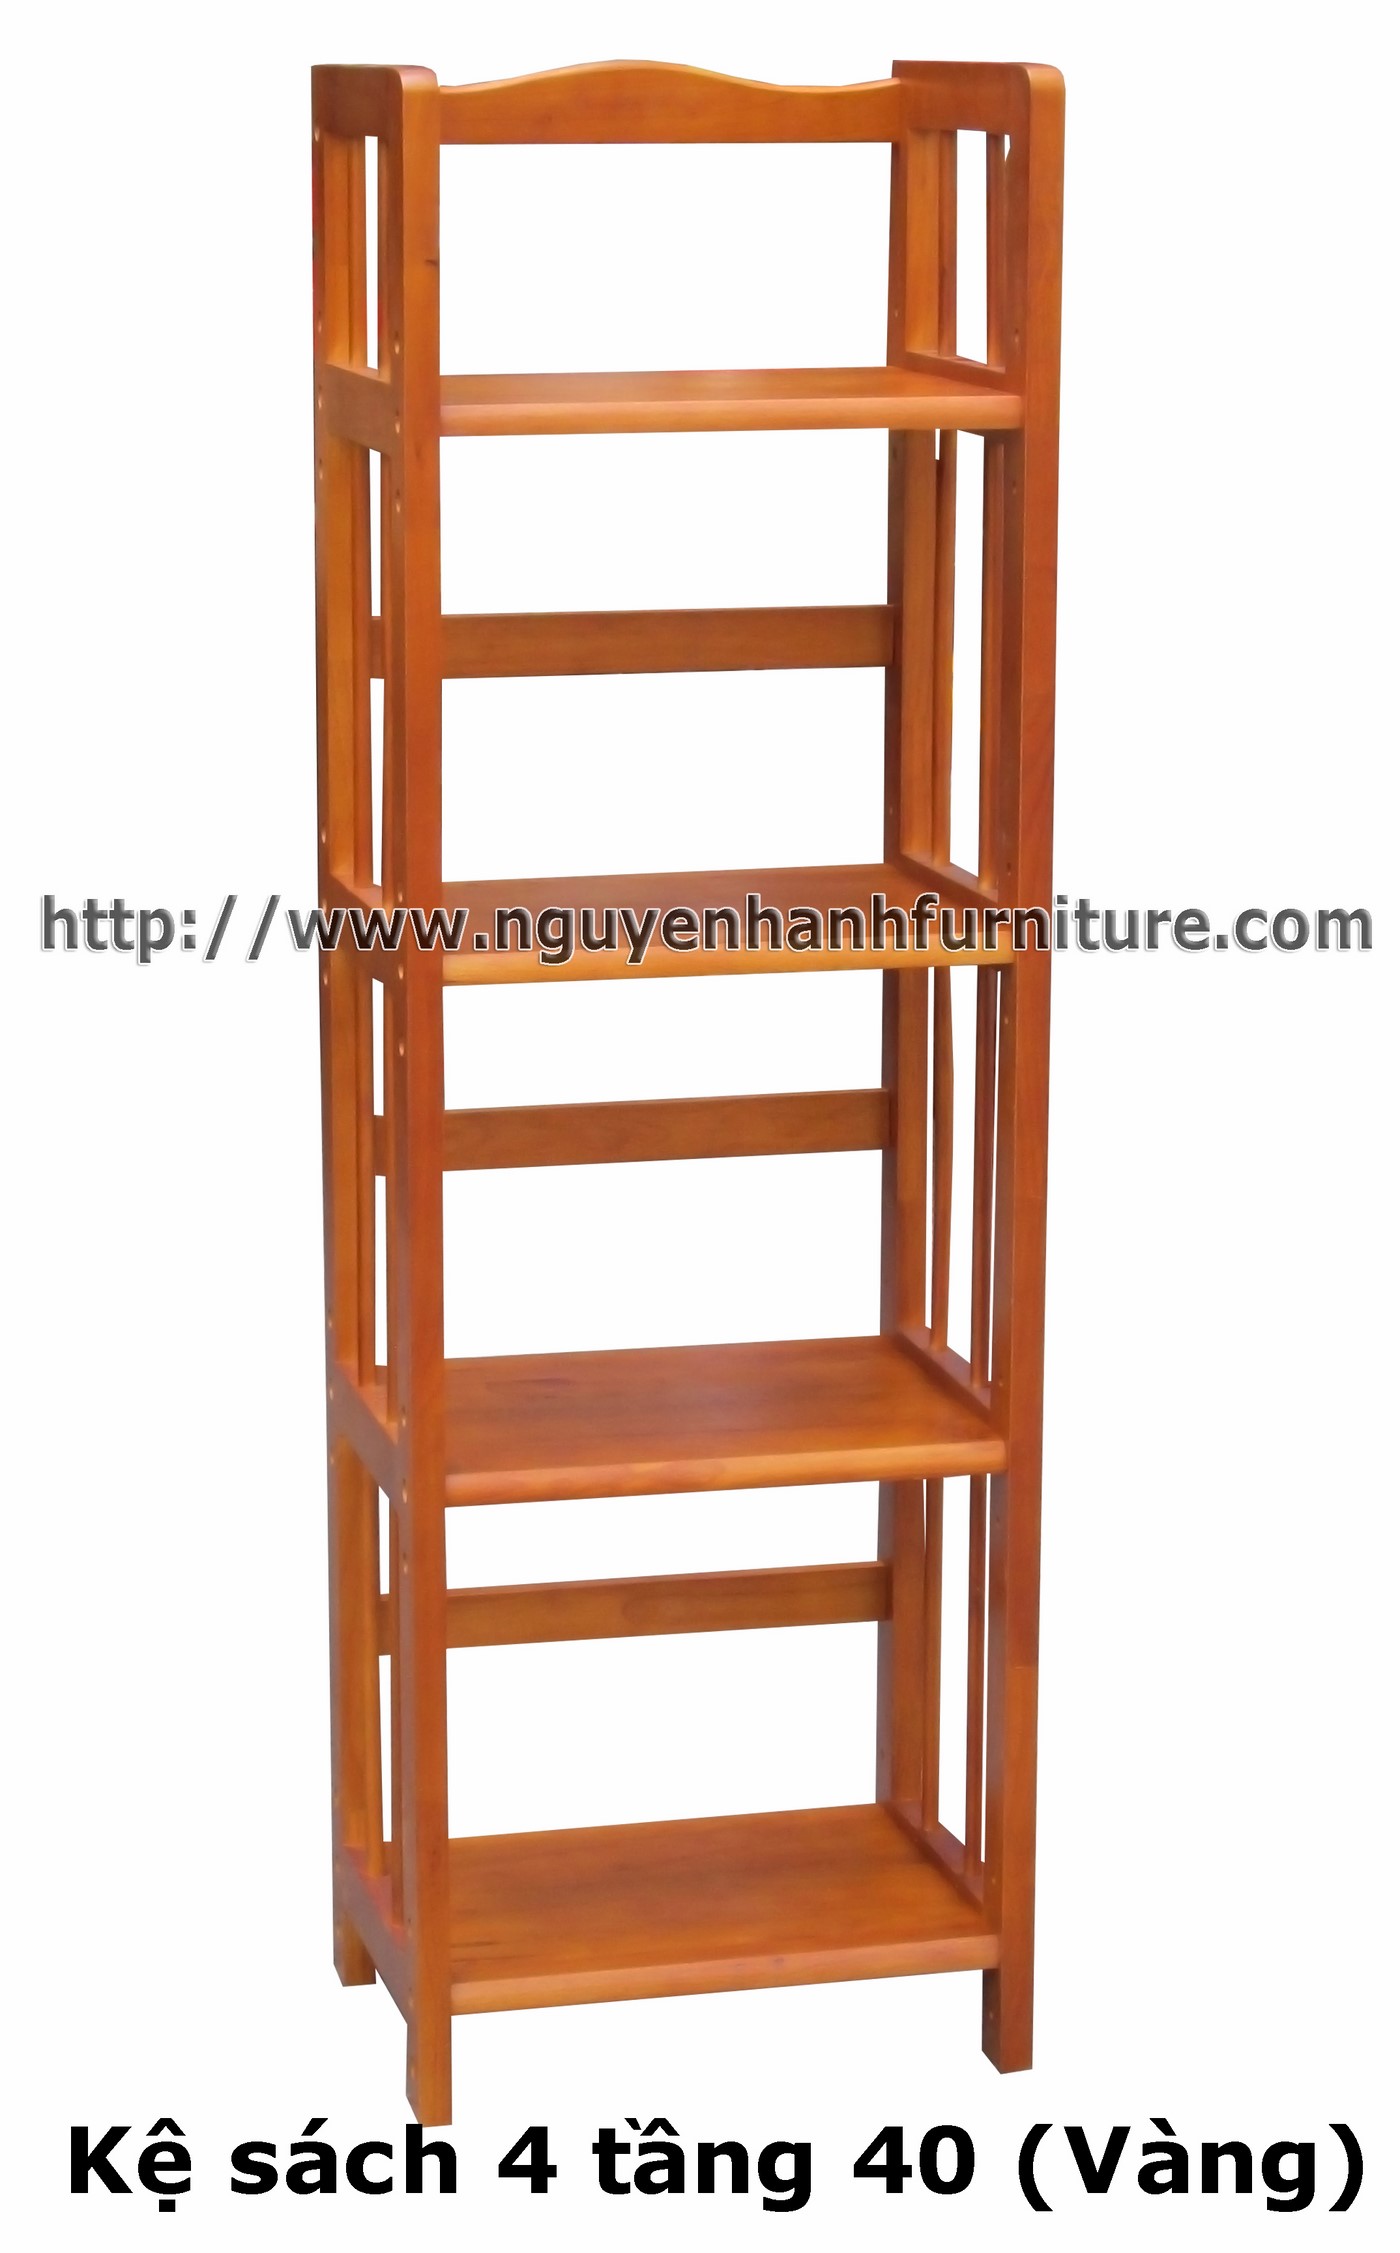 Name product: 4 storey Adjustable Bookshelf 40 (Yellow) - Dimensions: 40 x 28 x 120 (H) - Description: Wood natural rubber